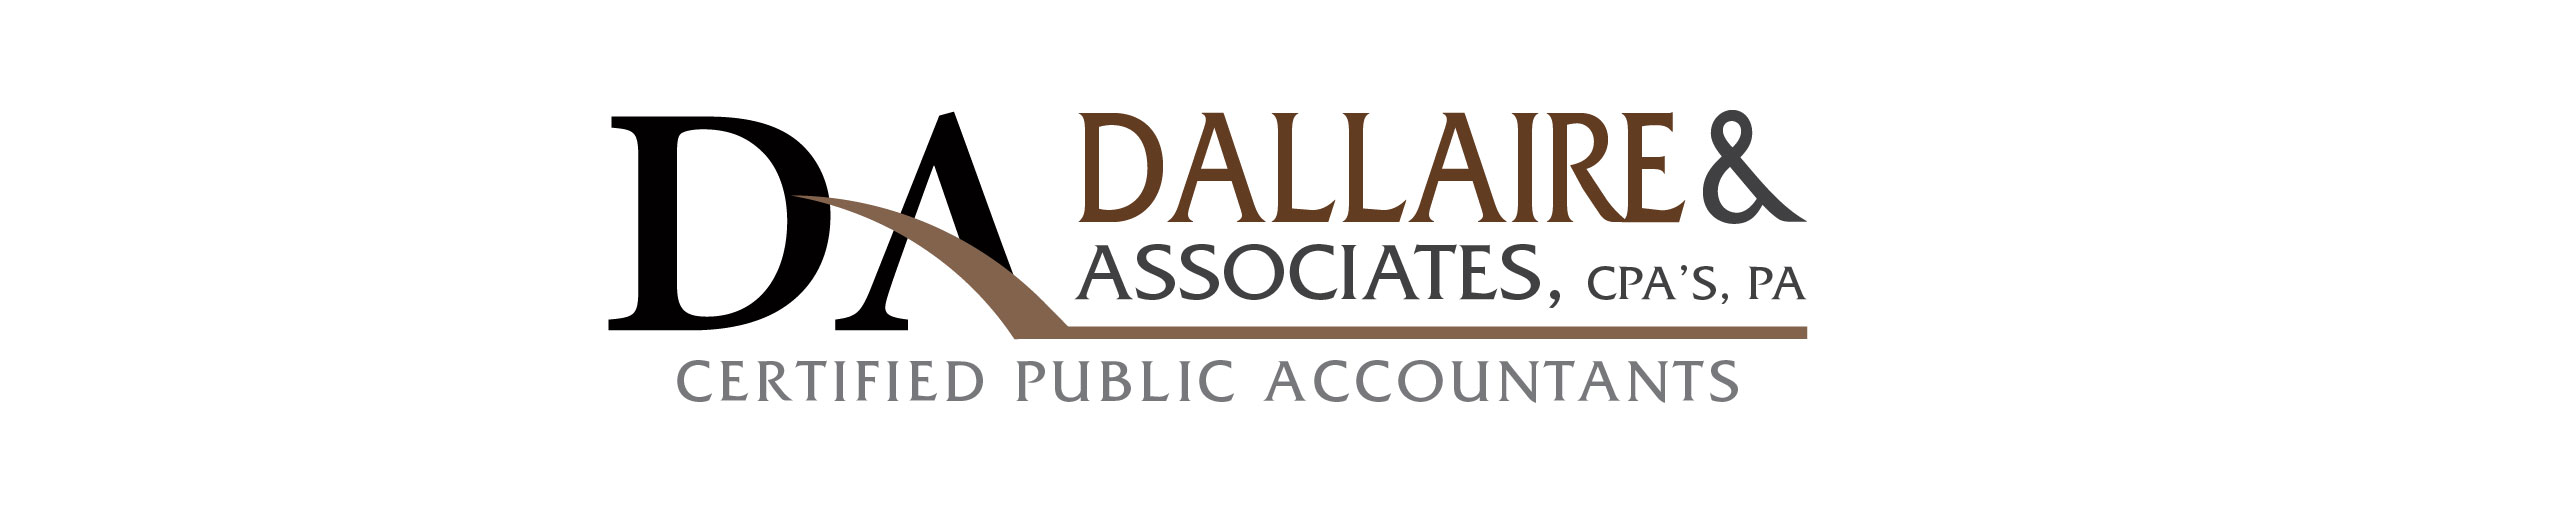 Dallaire & Associates, CPAs, PA